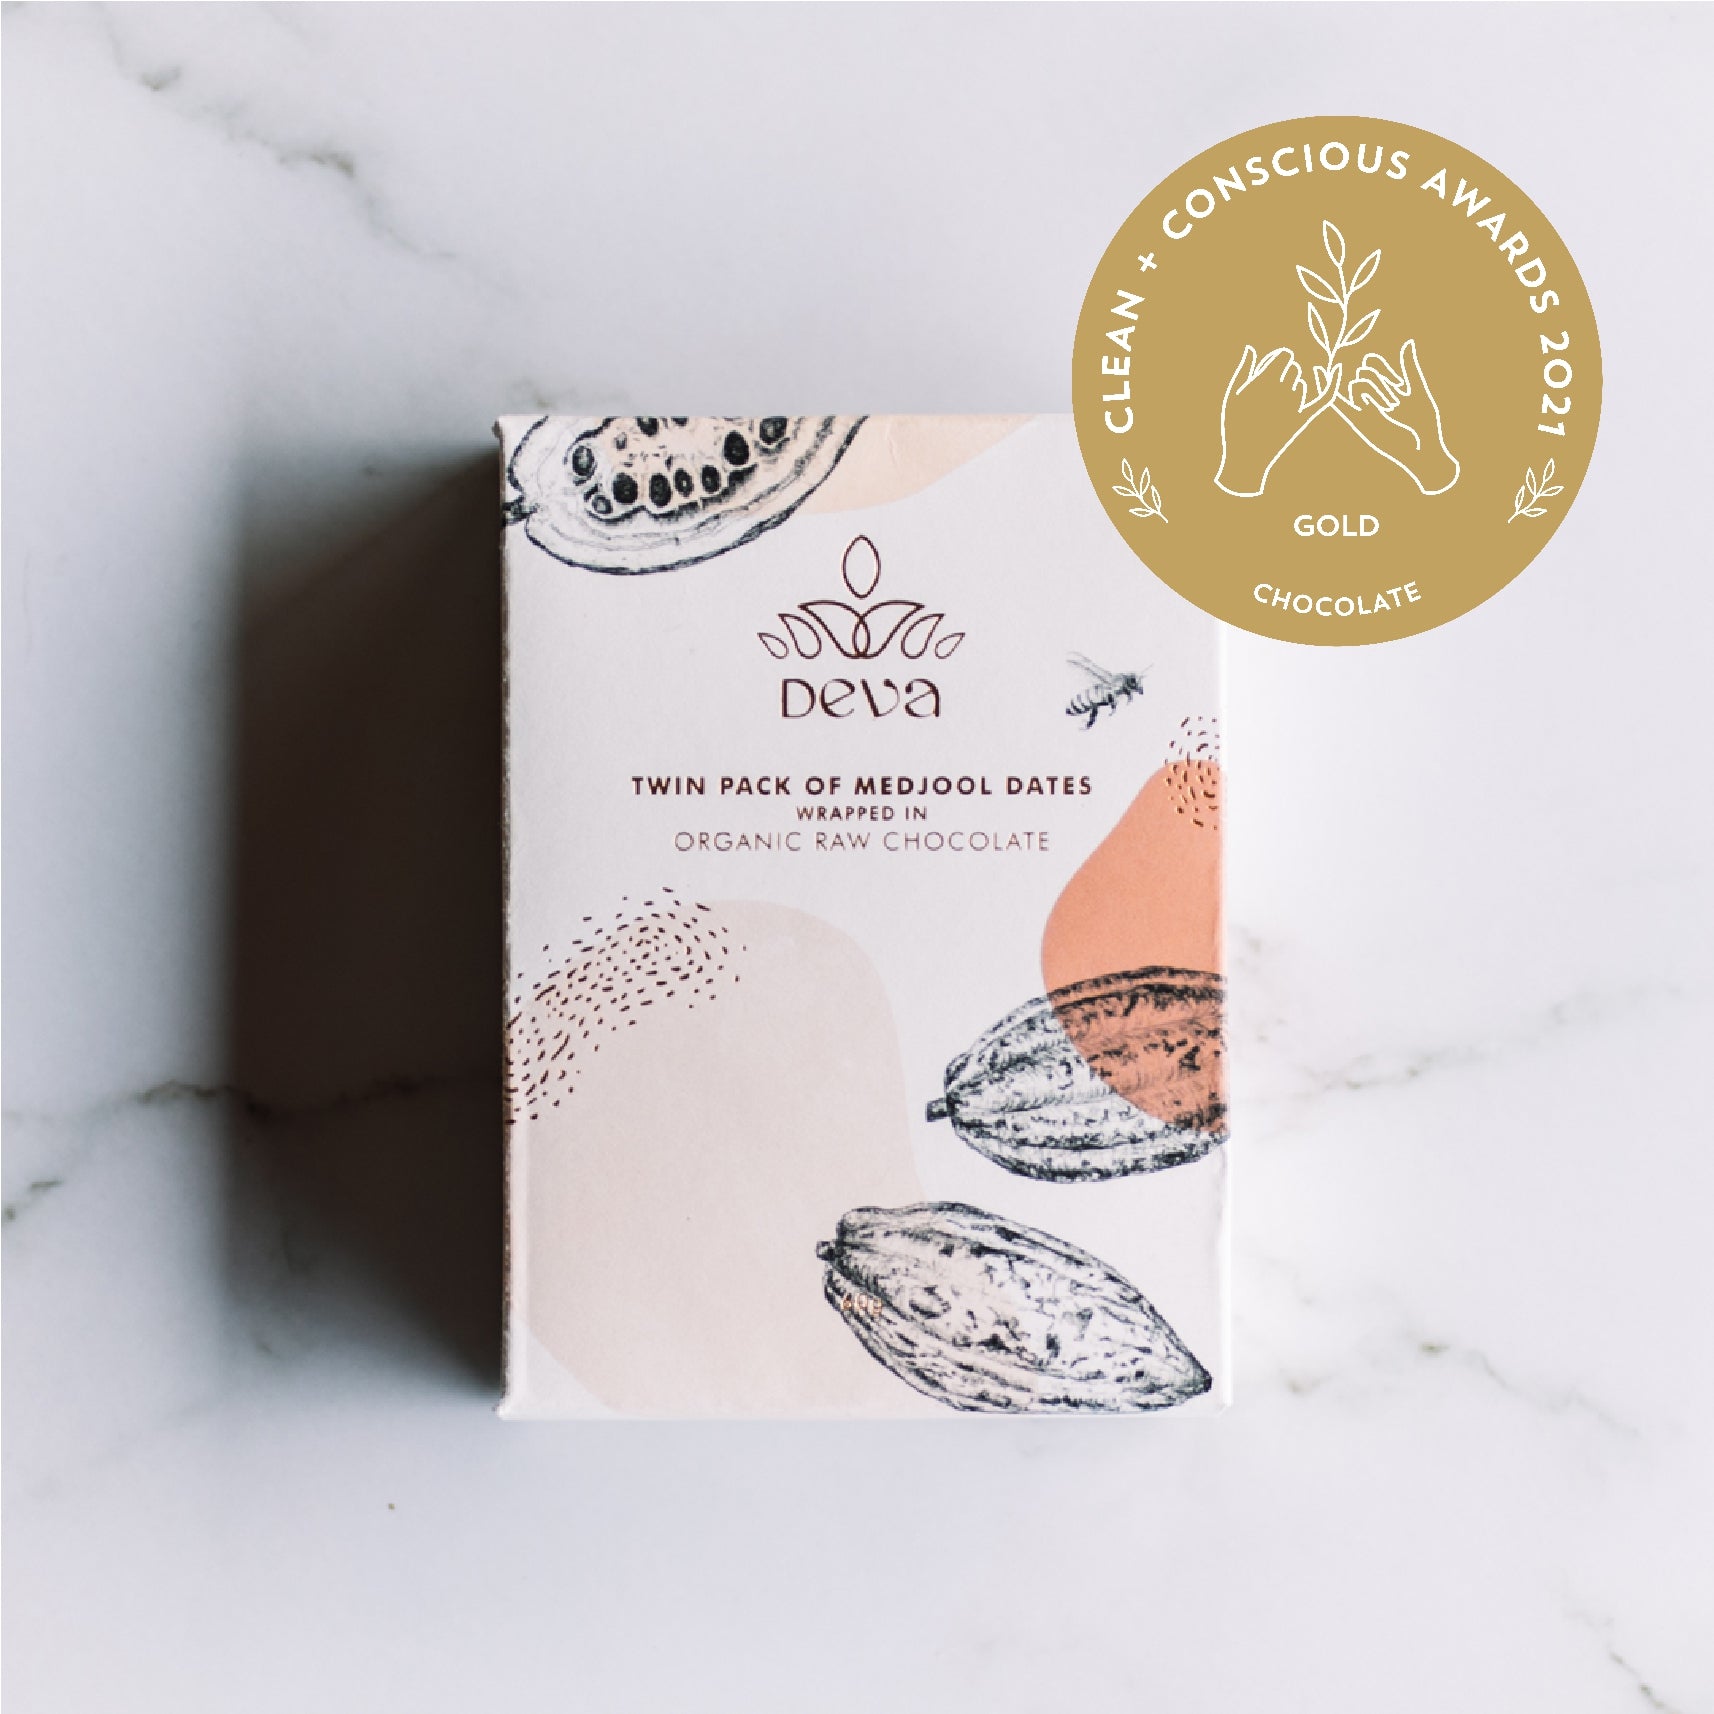 GOLD MEDAL WINNER - Twin pack organic medjool date chocolate